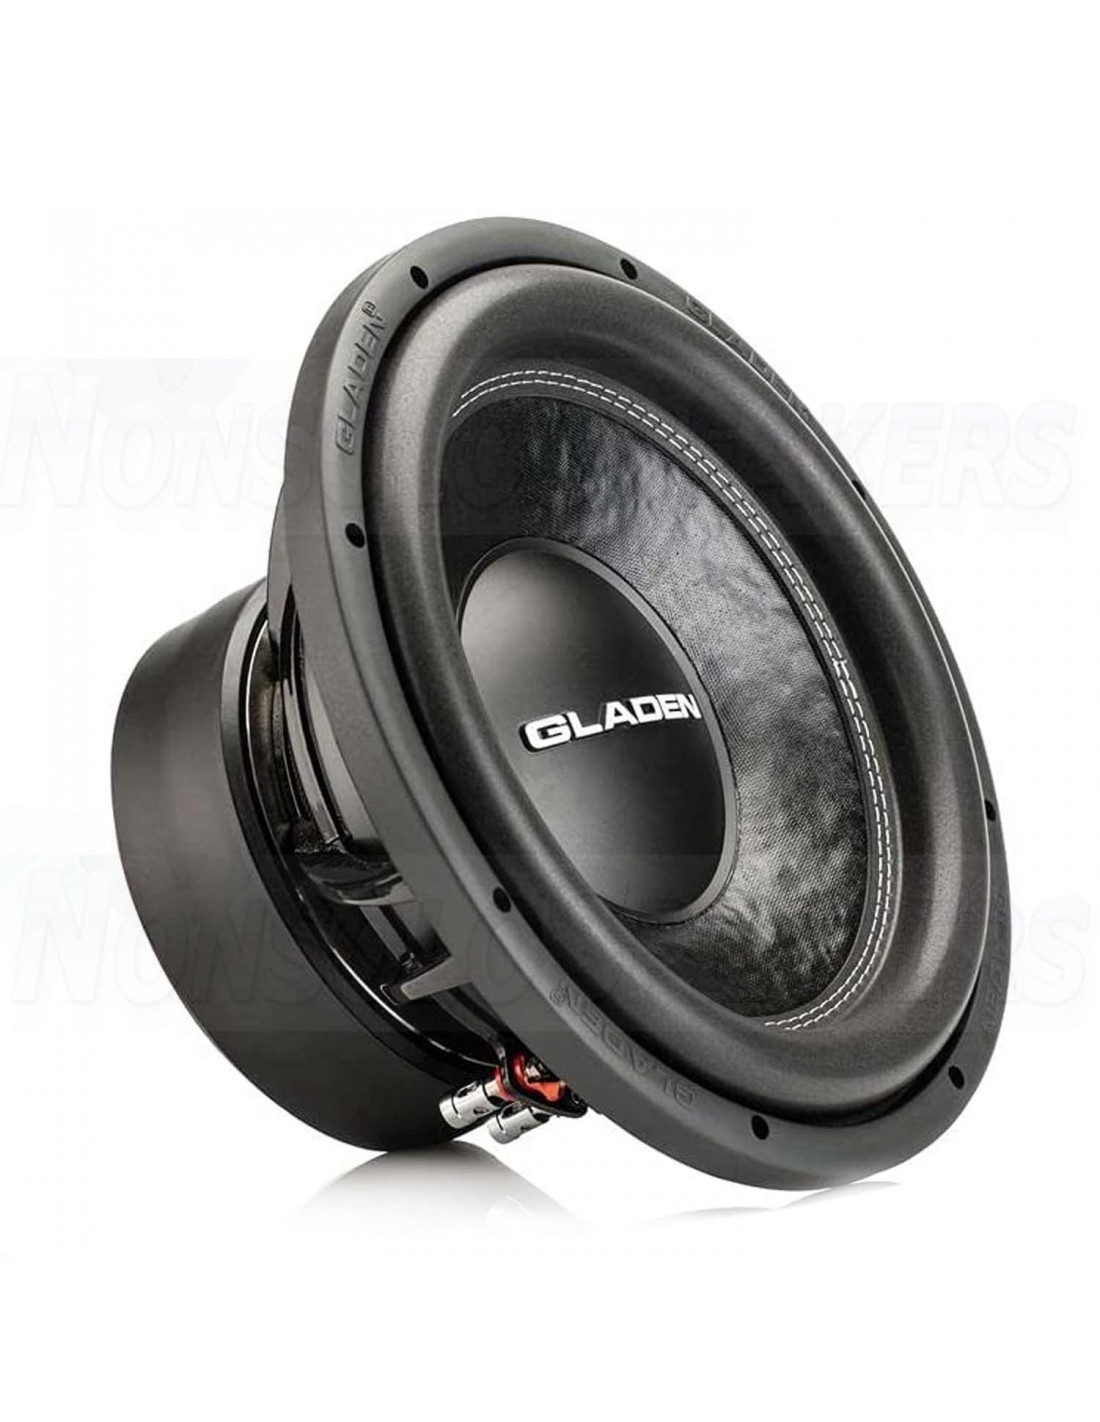 Gladen SQX 12 Extreme Subwoofer speakers 30